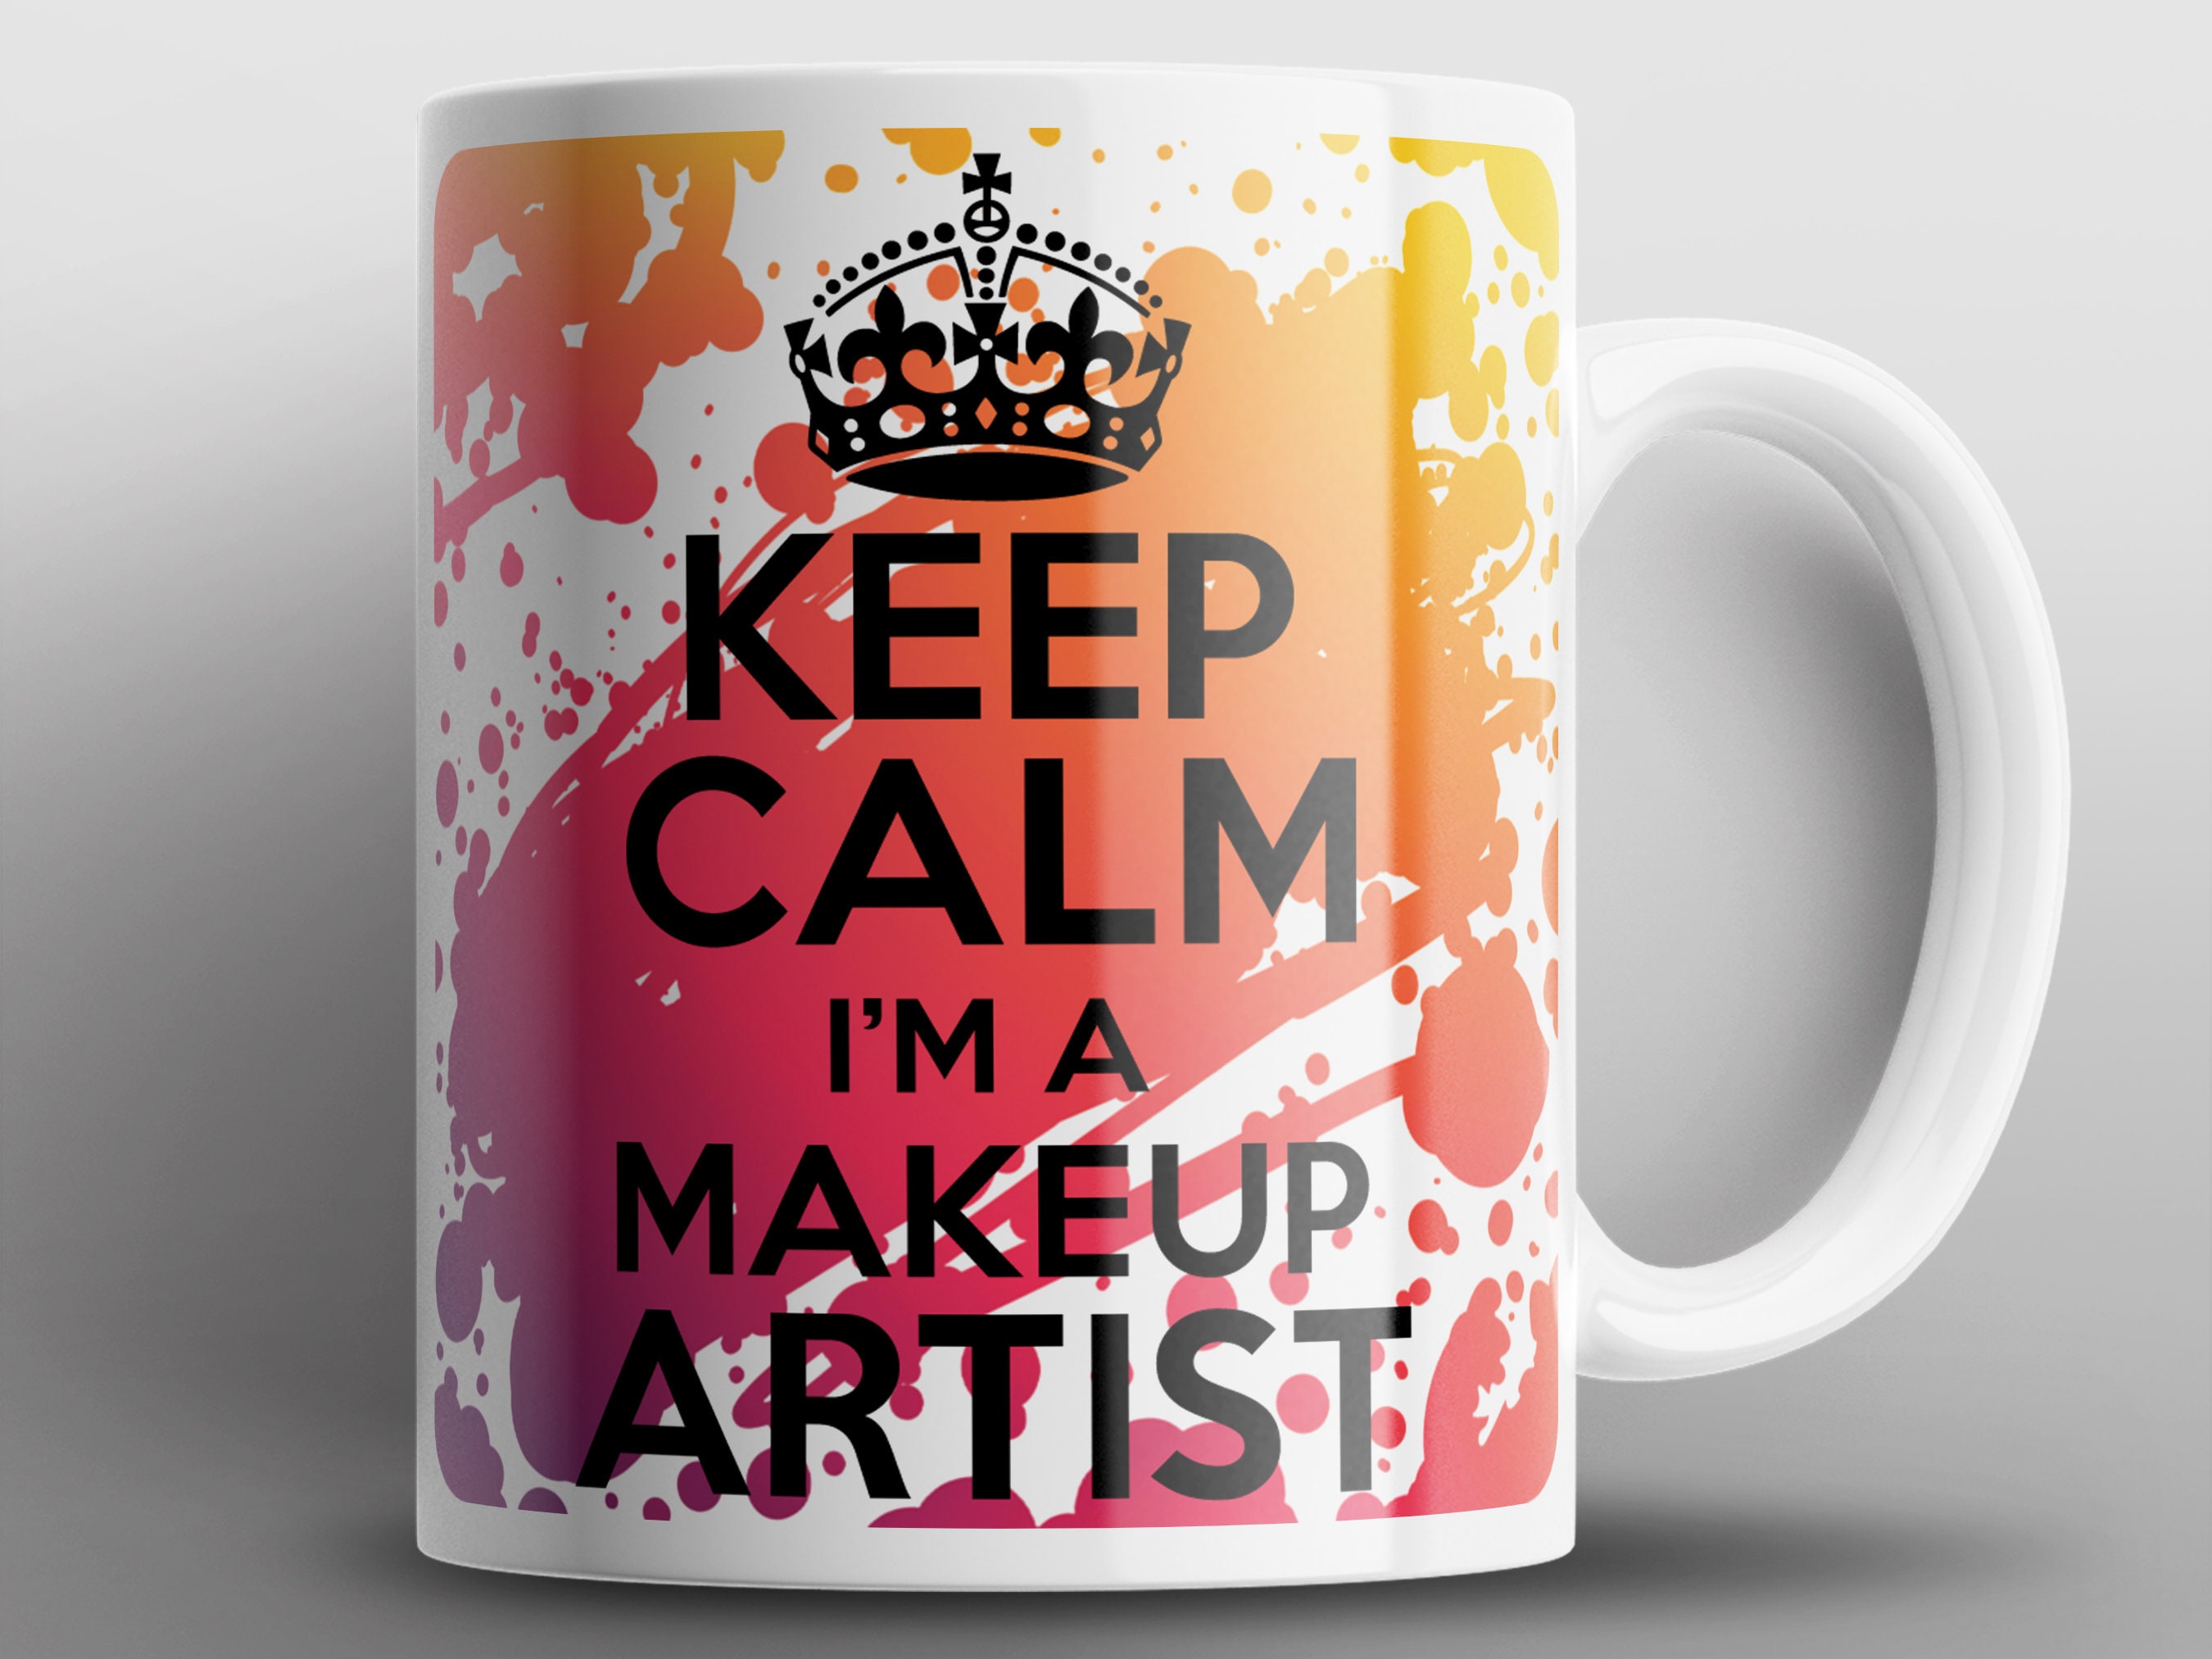 Artist Mug, Funny Artist Gift for Artsy Person, Gift for Artistic People,  Gift for Artist Man, Gift for Art People, Artistic Gifts, UK